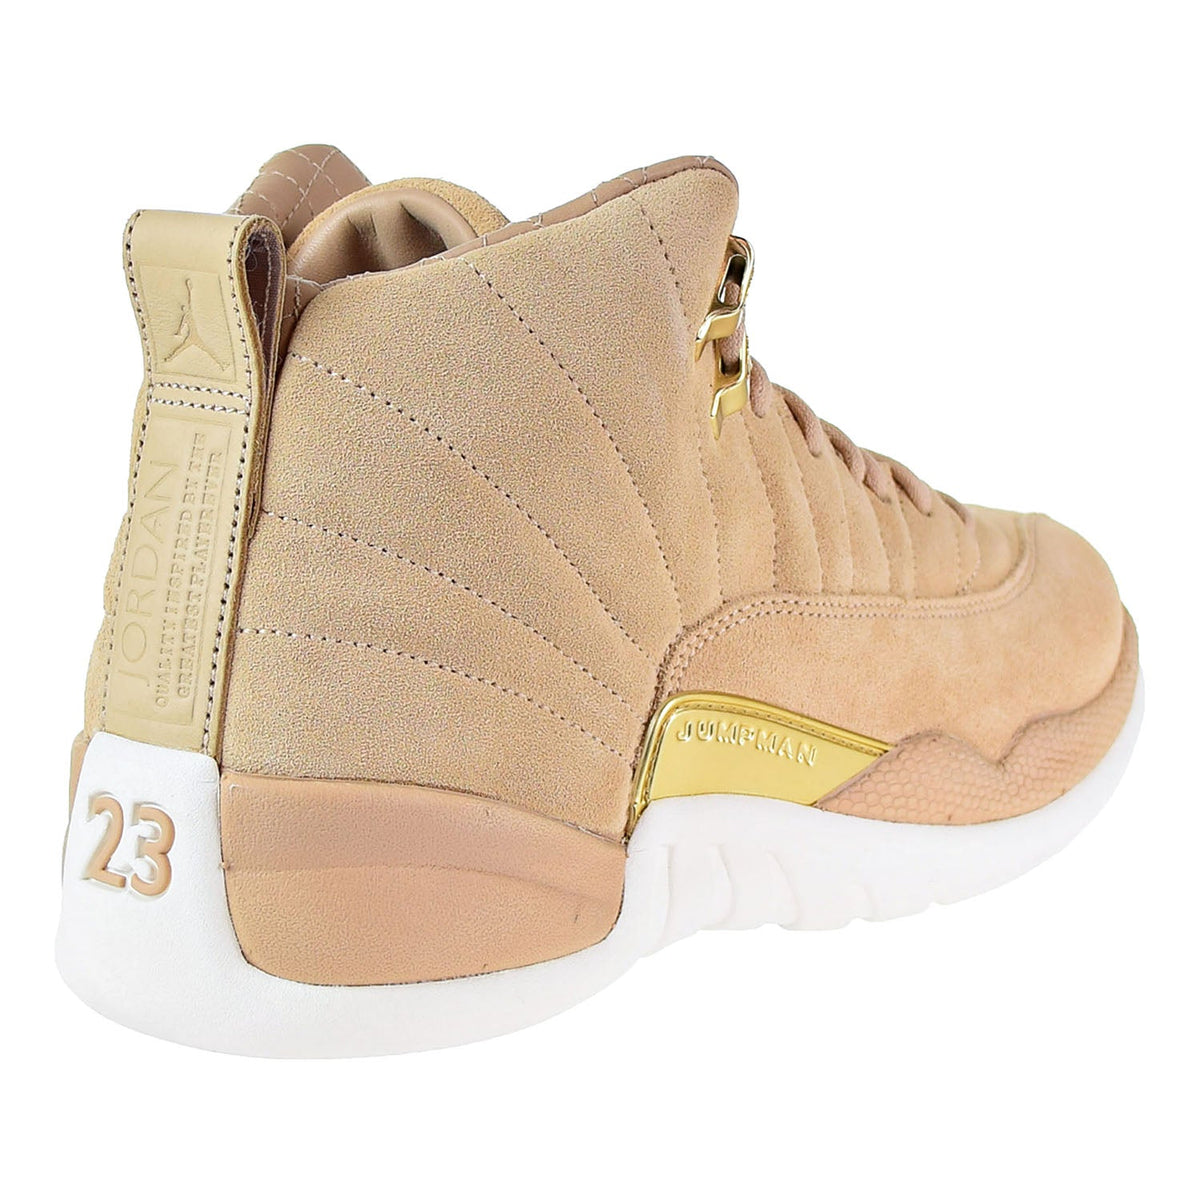 Nike Air Jordan 12 Retro Vachetta Tan Metallic Gold-Sail Women’s Shoes Size  9